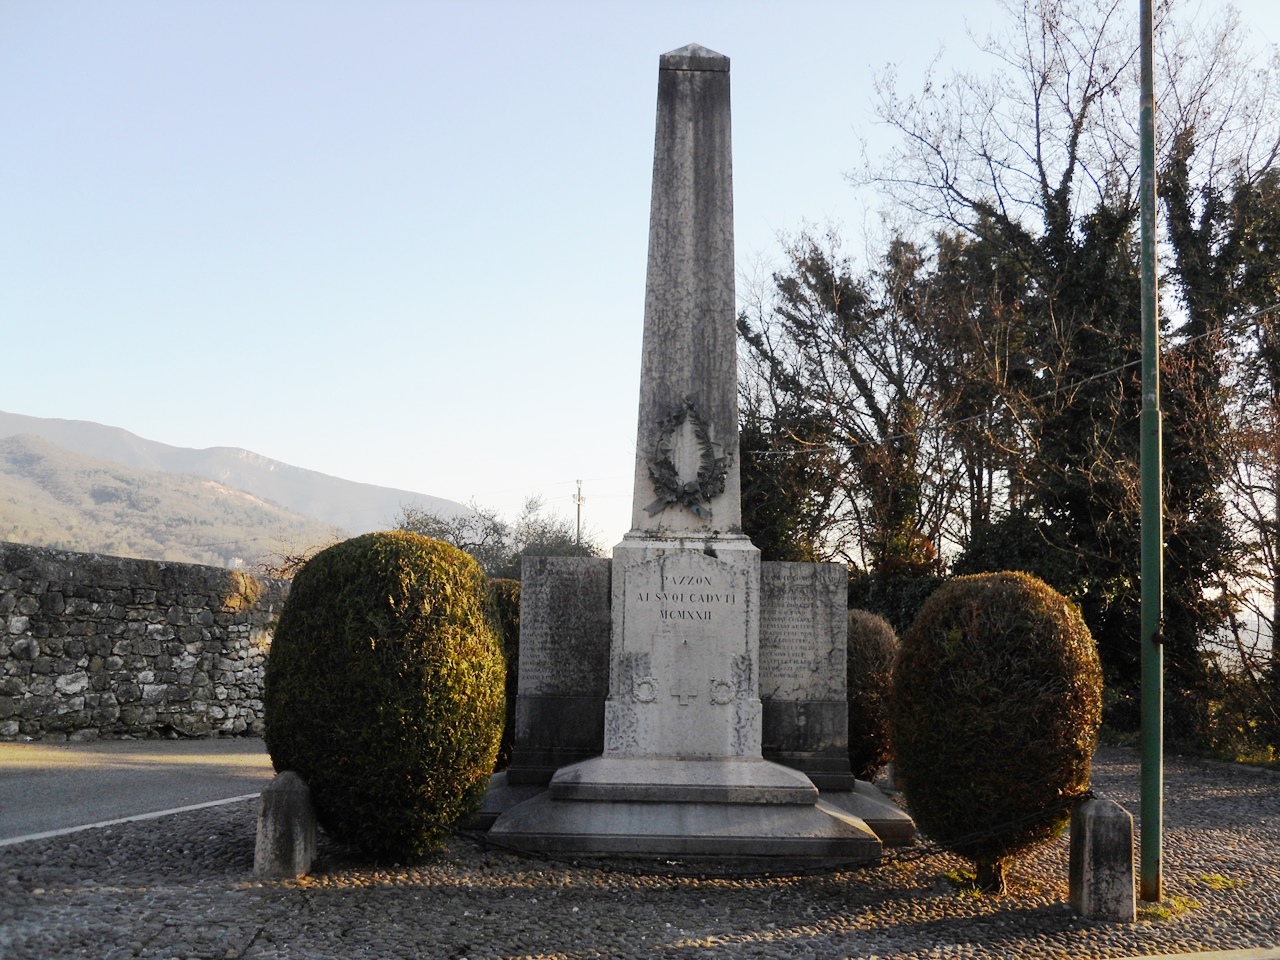 monumento ai caduti - ad obelisco di Banterle Francesco (sec. XX)